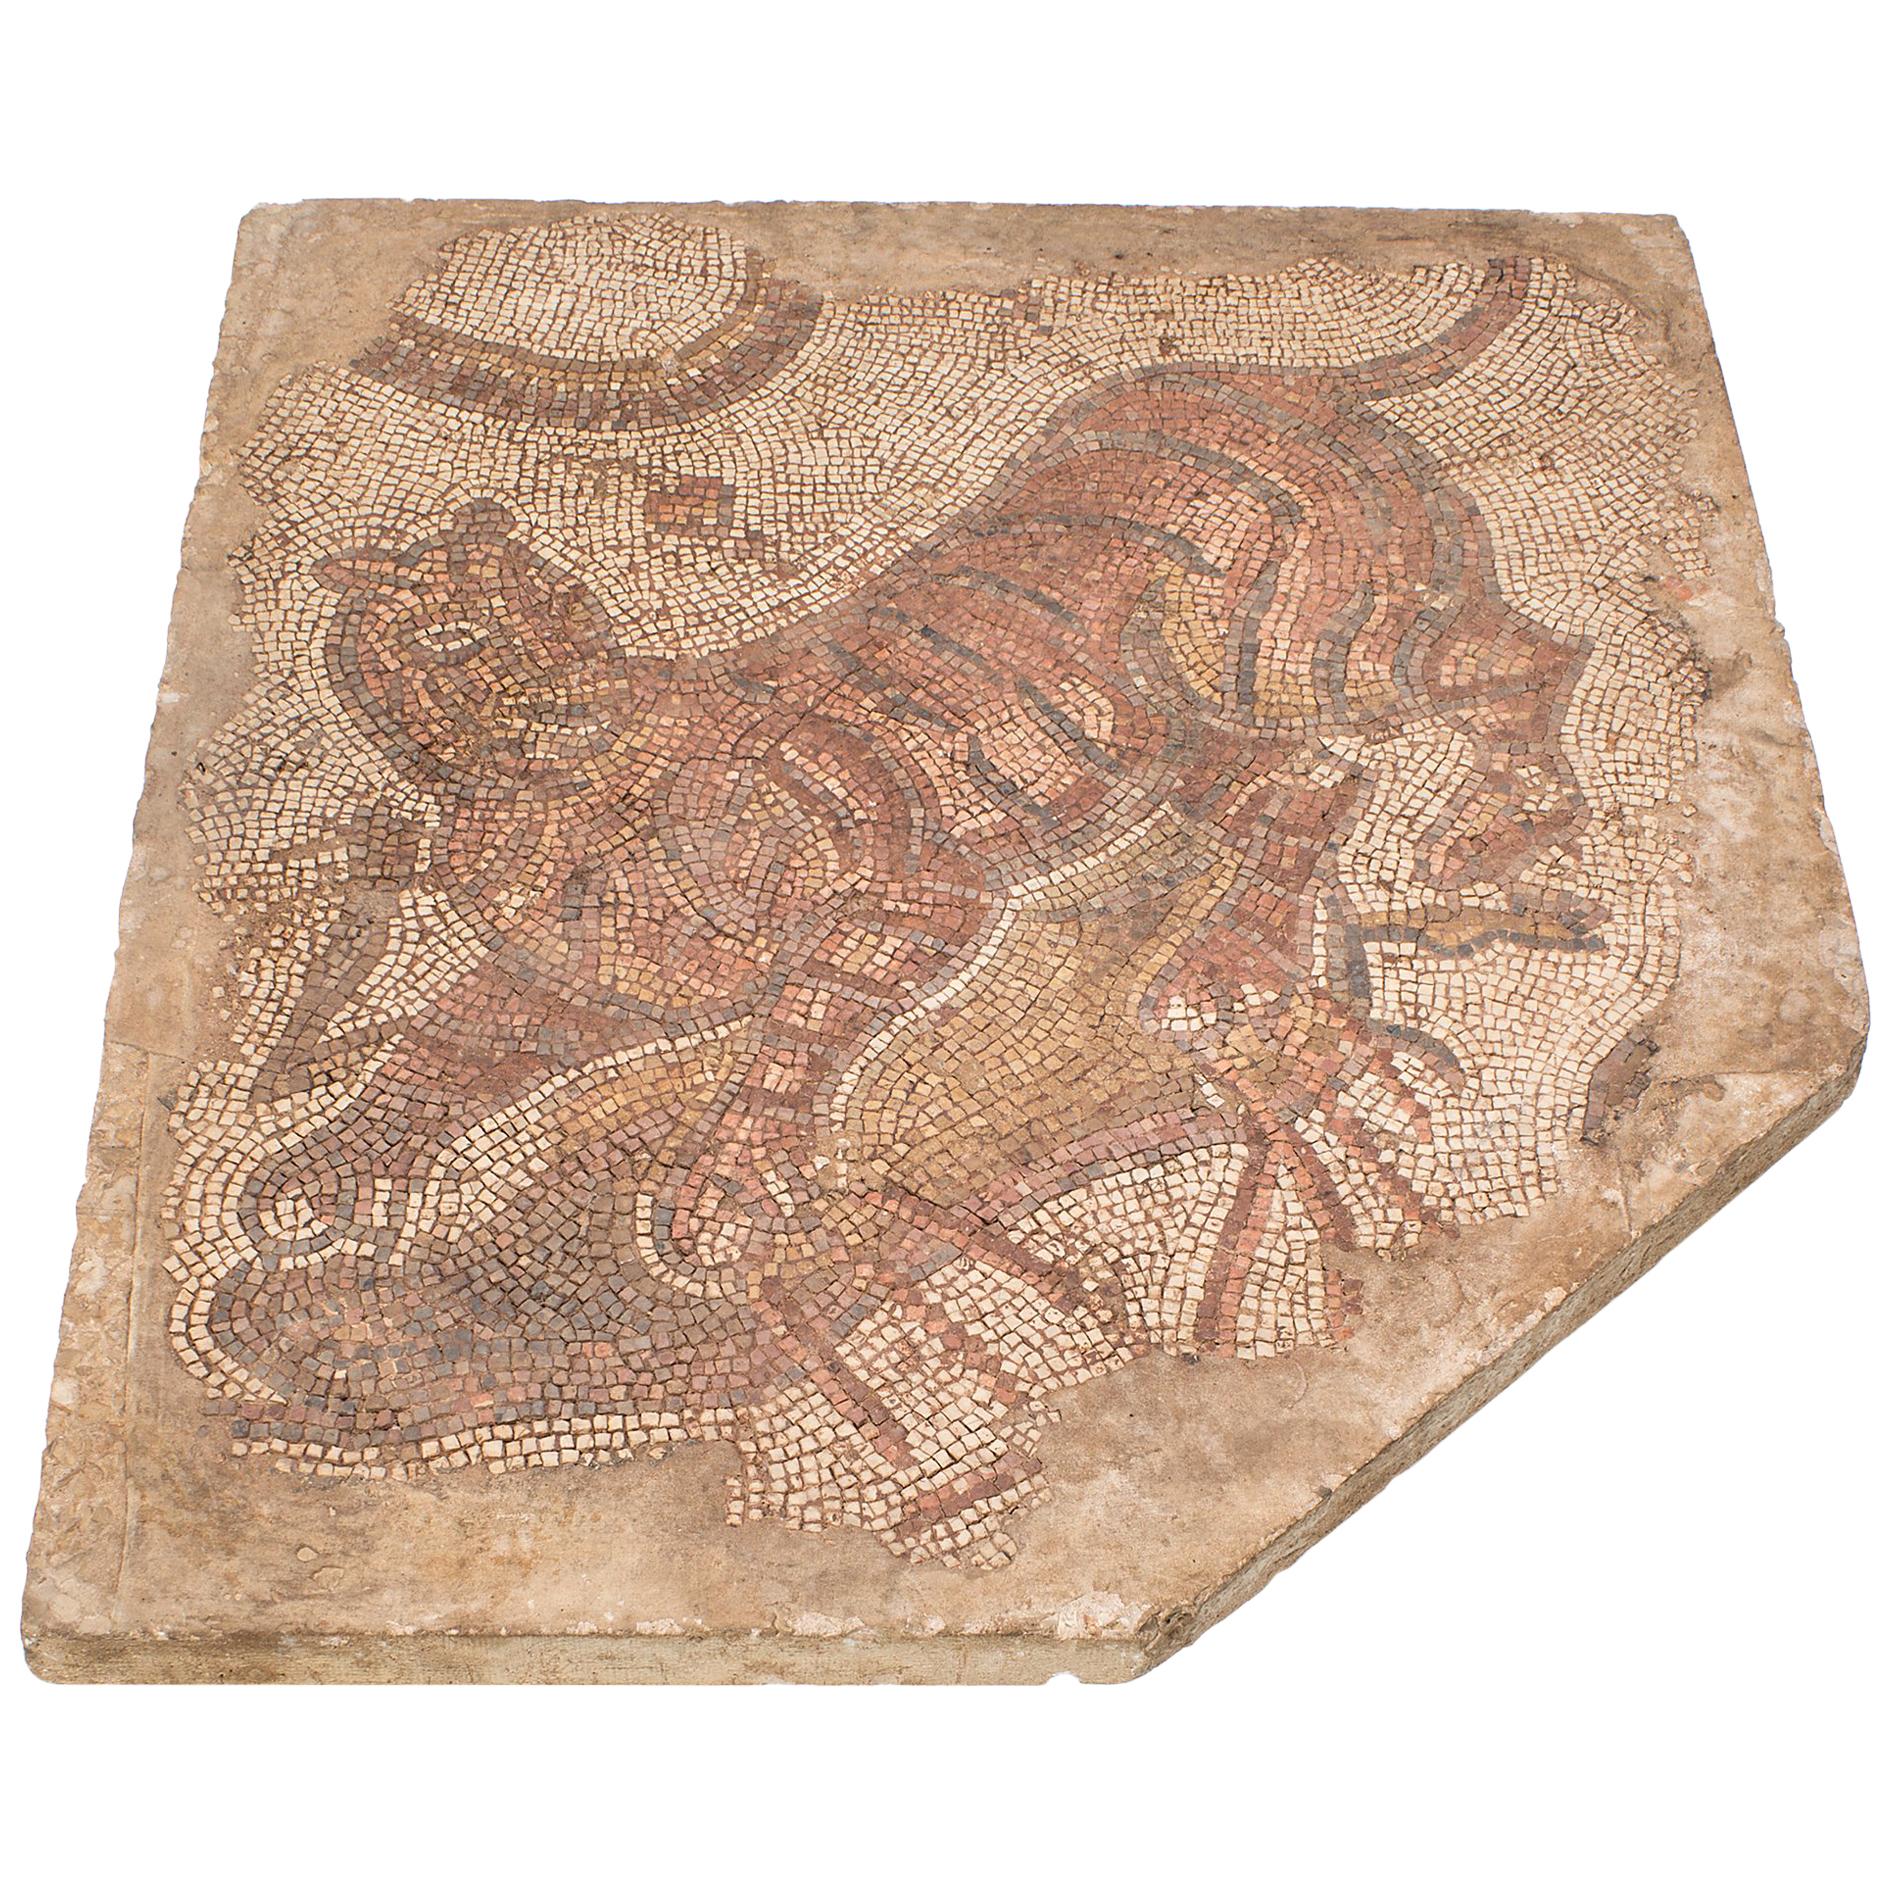 Late Roman Tiger Mosaic Table